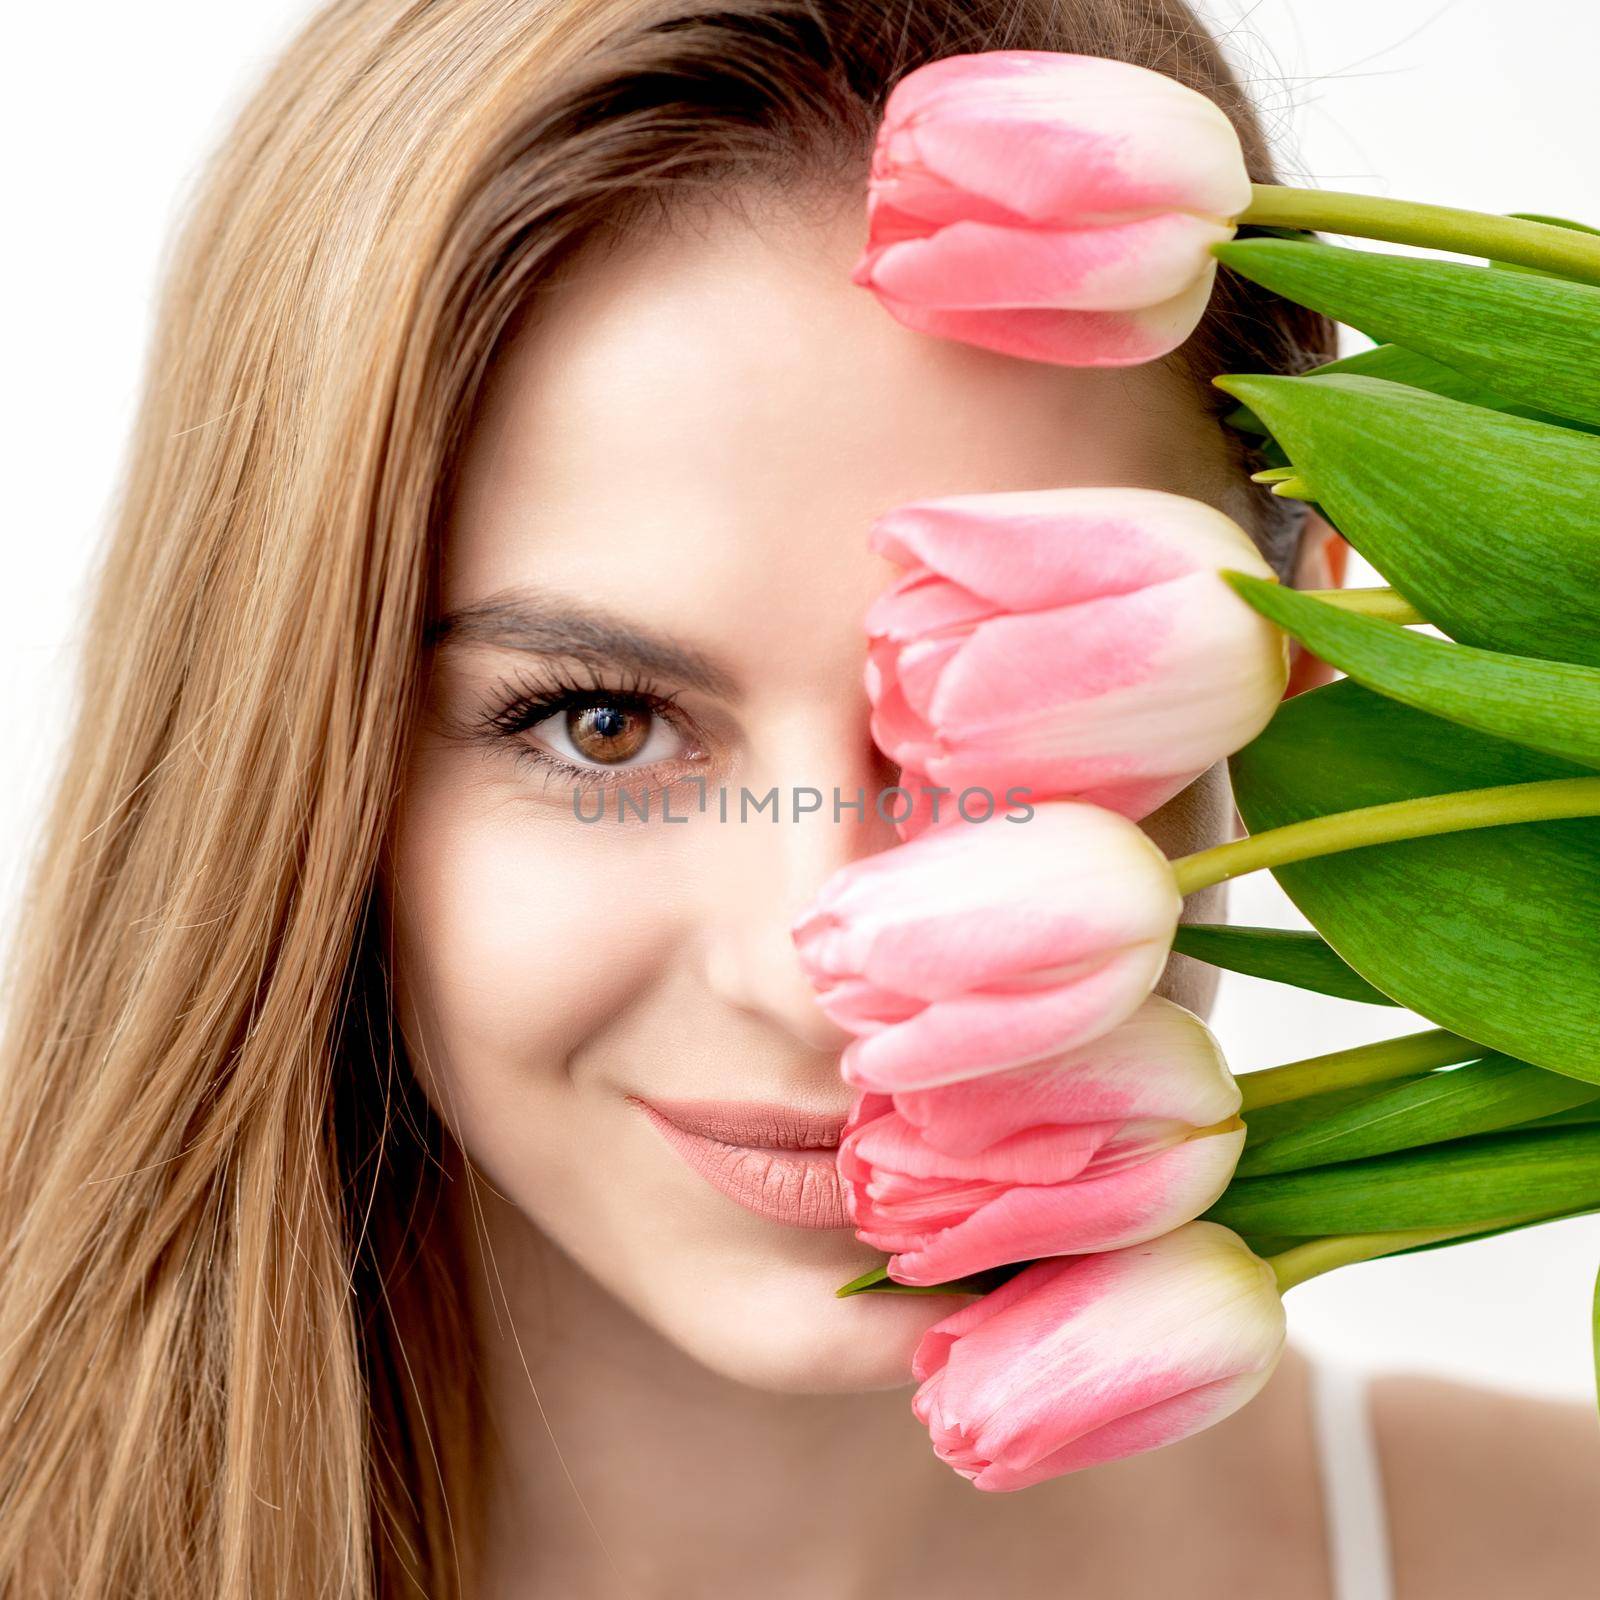 Portrait of woman with pink tulips by okskukuruza